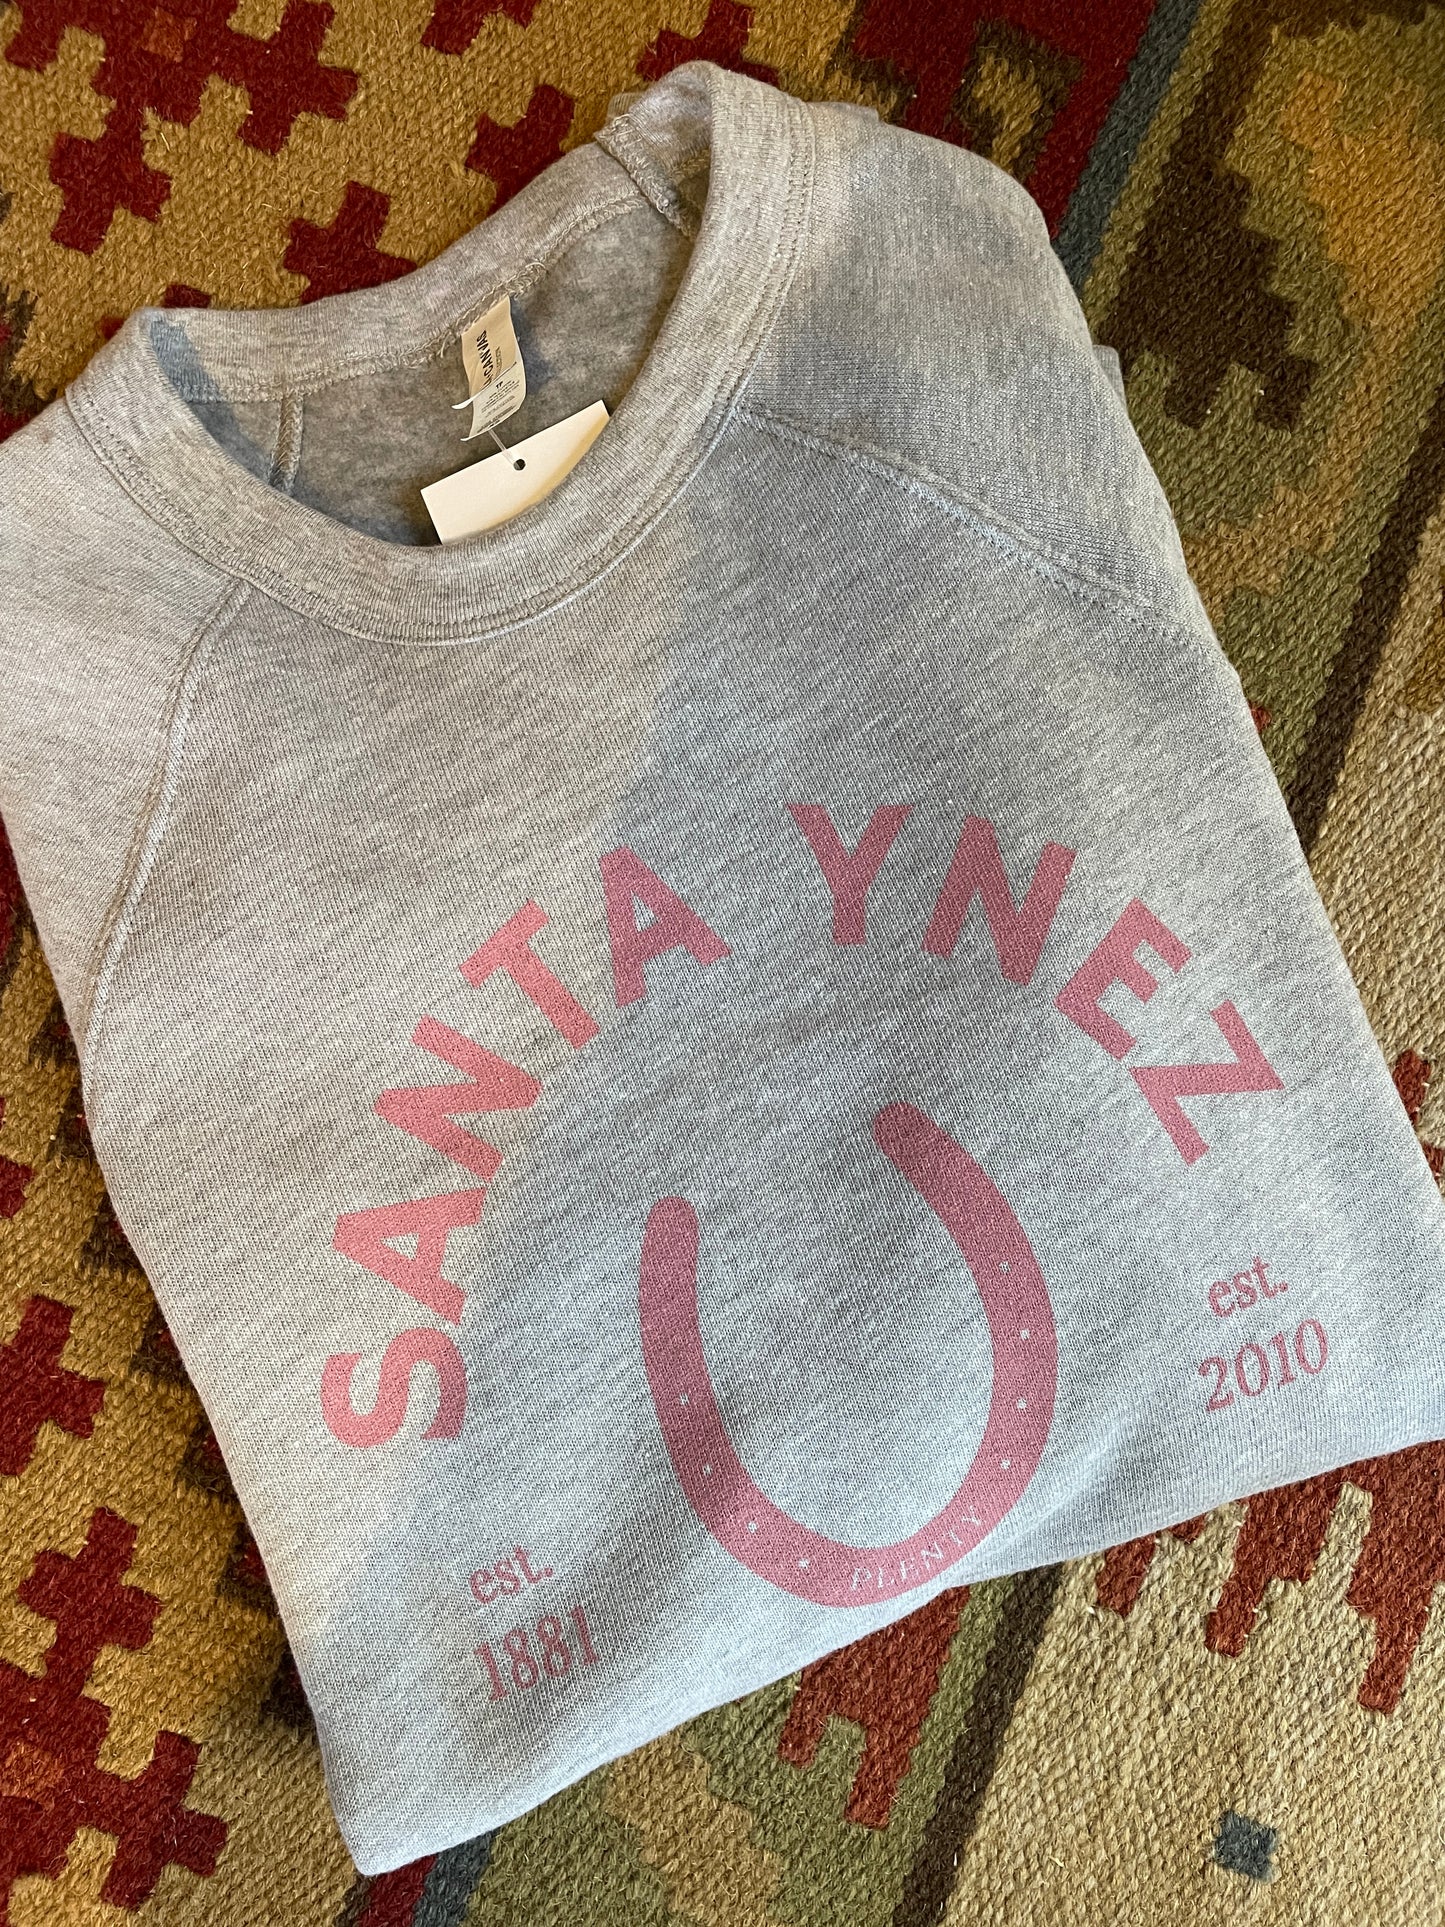 Santa Ynez Sweatshirt #1